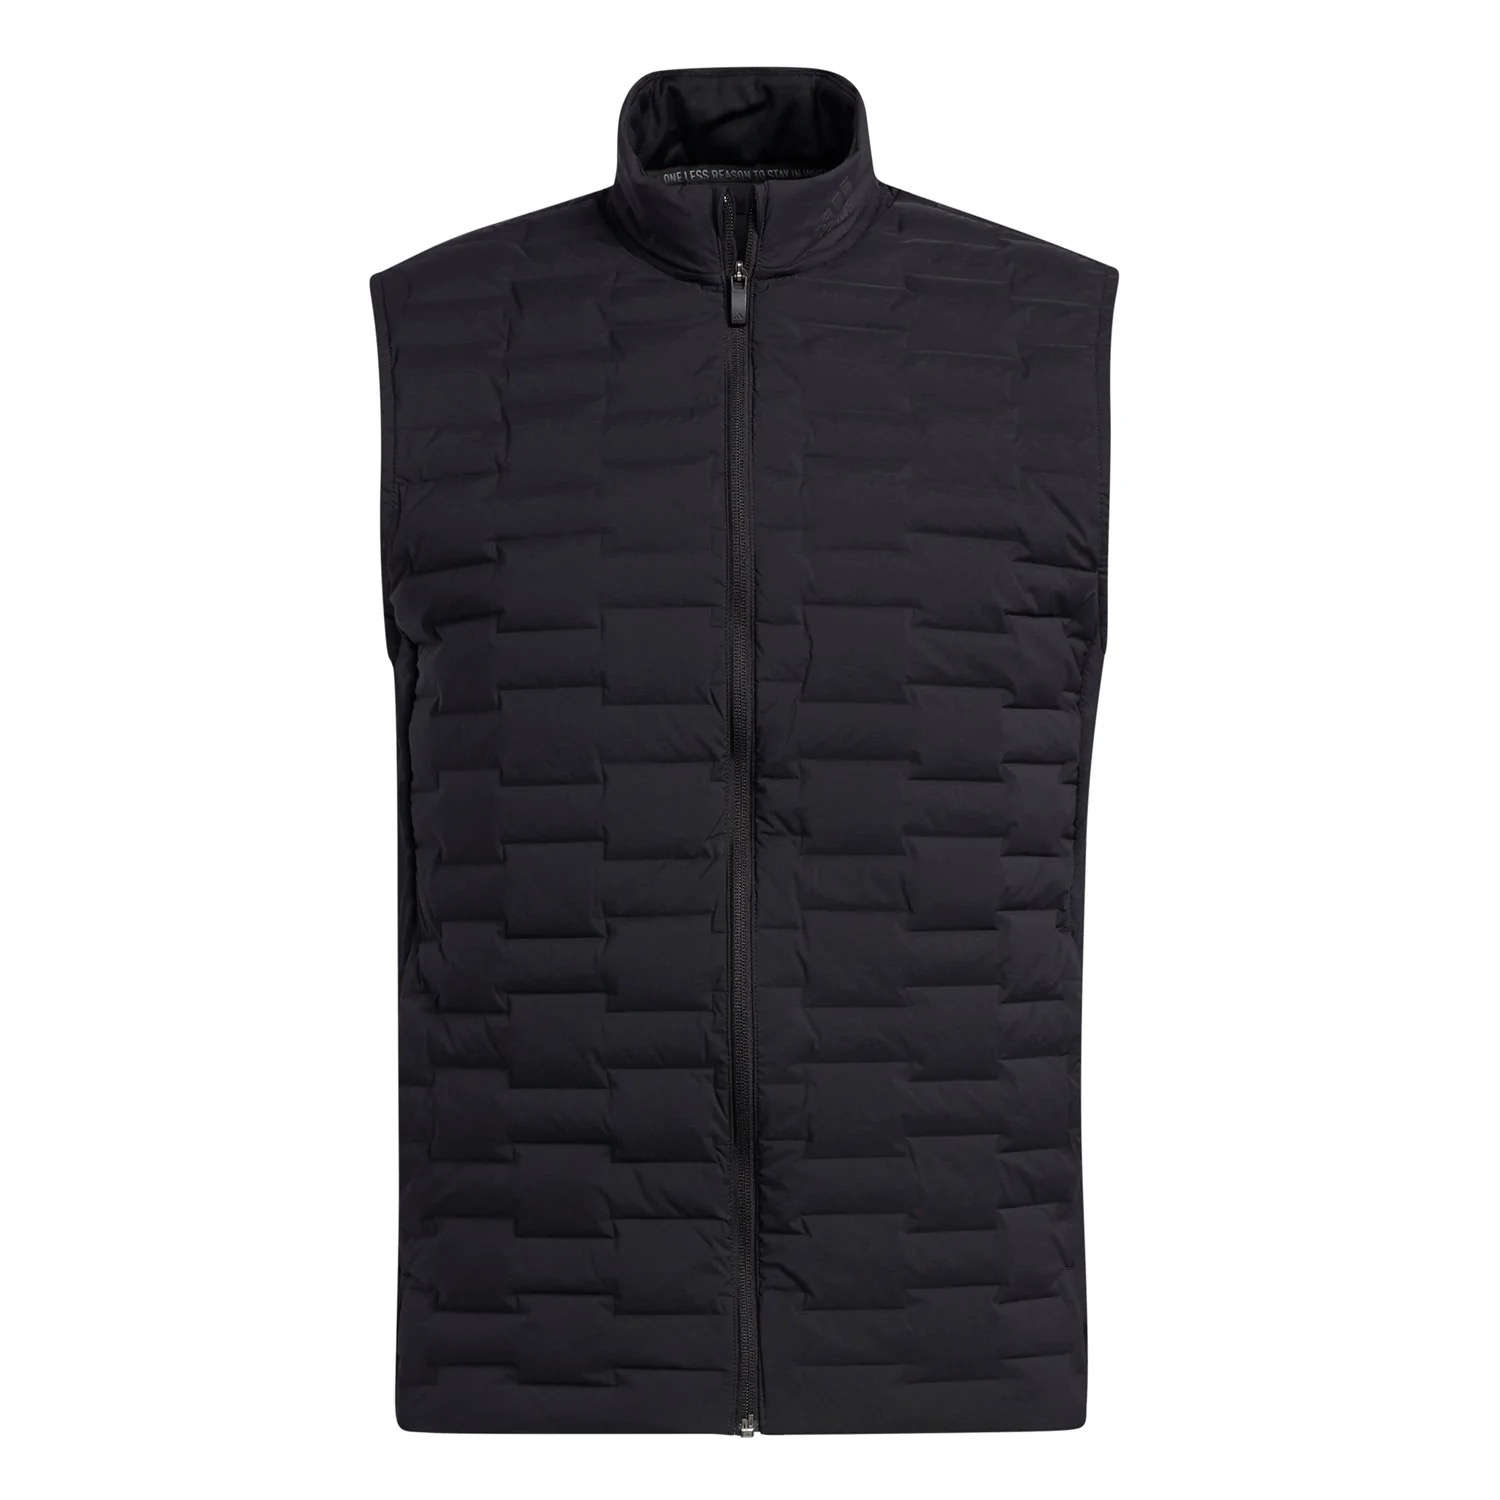 Adidas Frostguard Vest Black